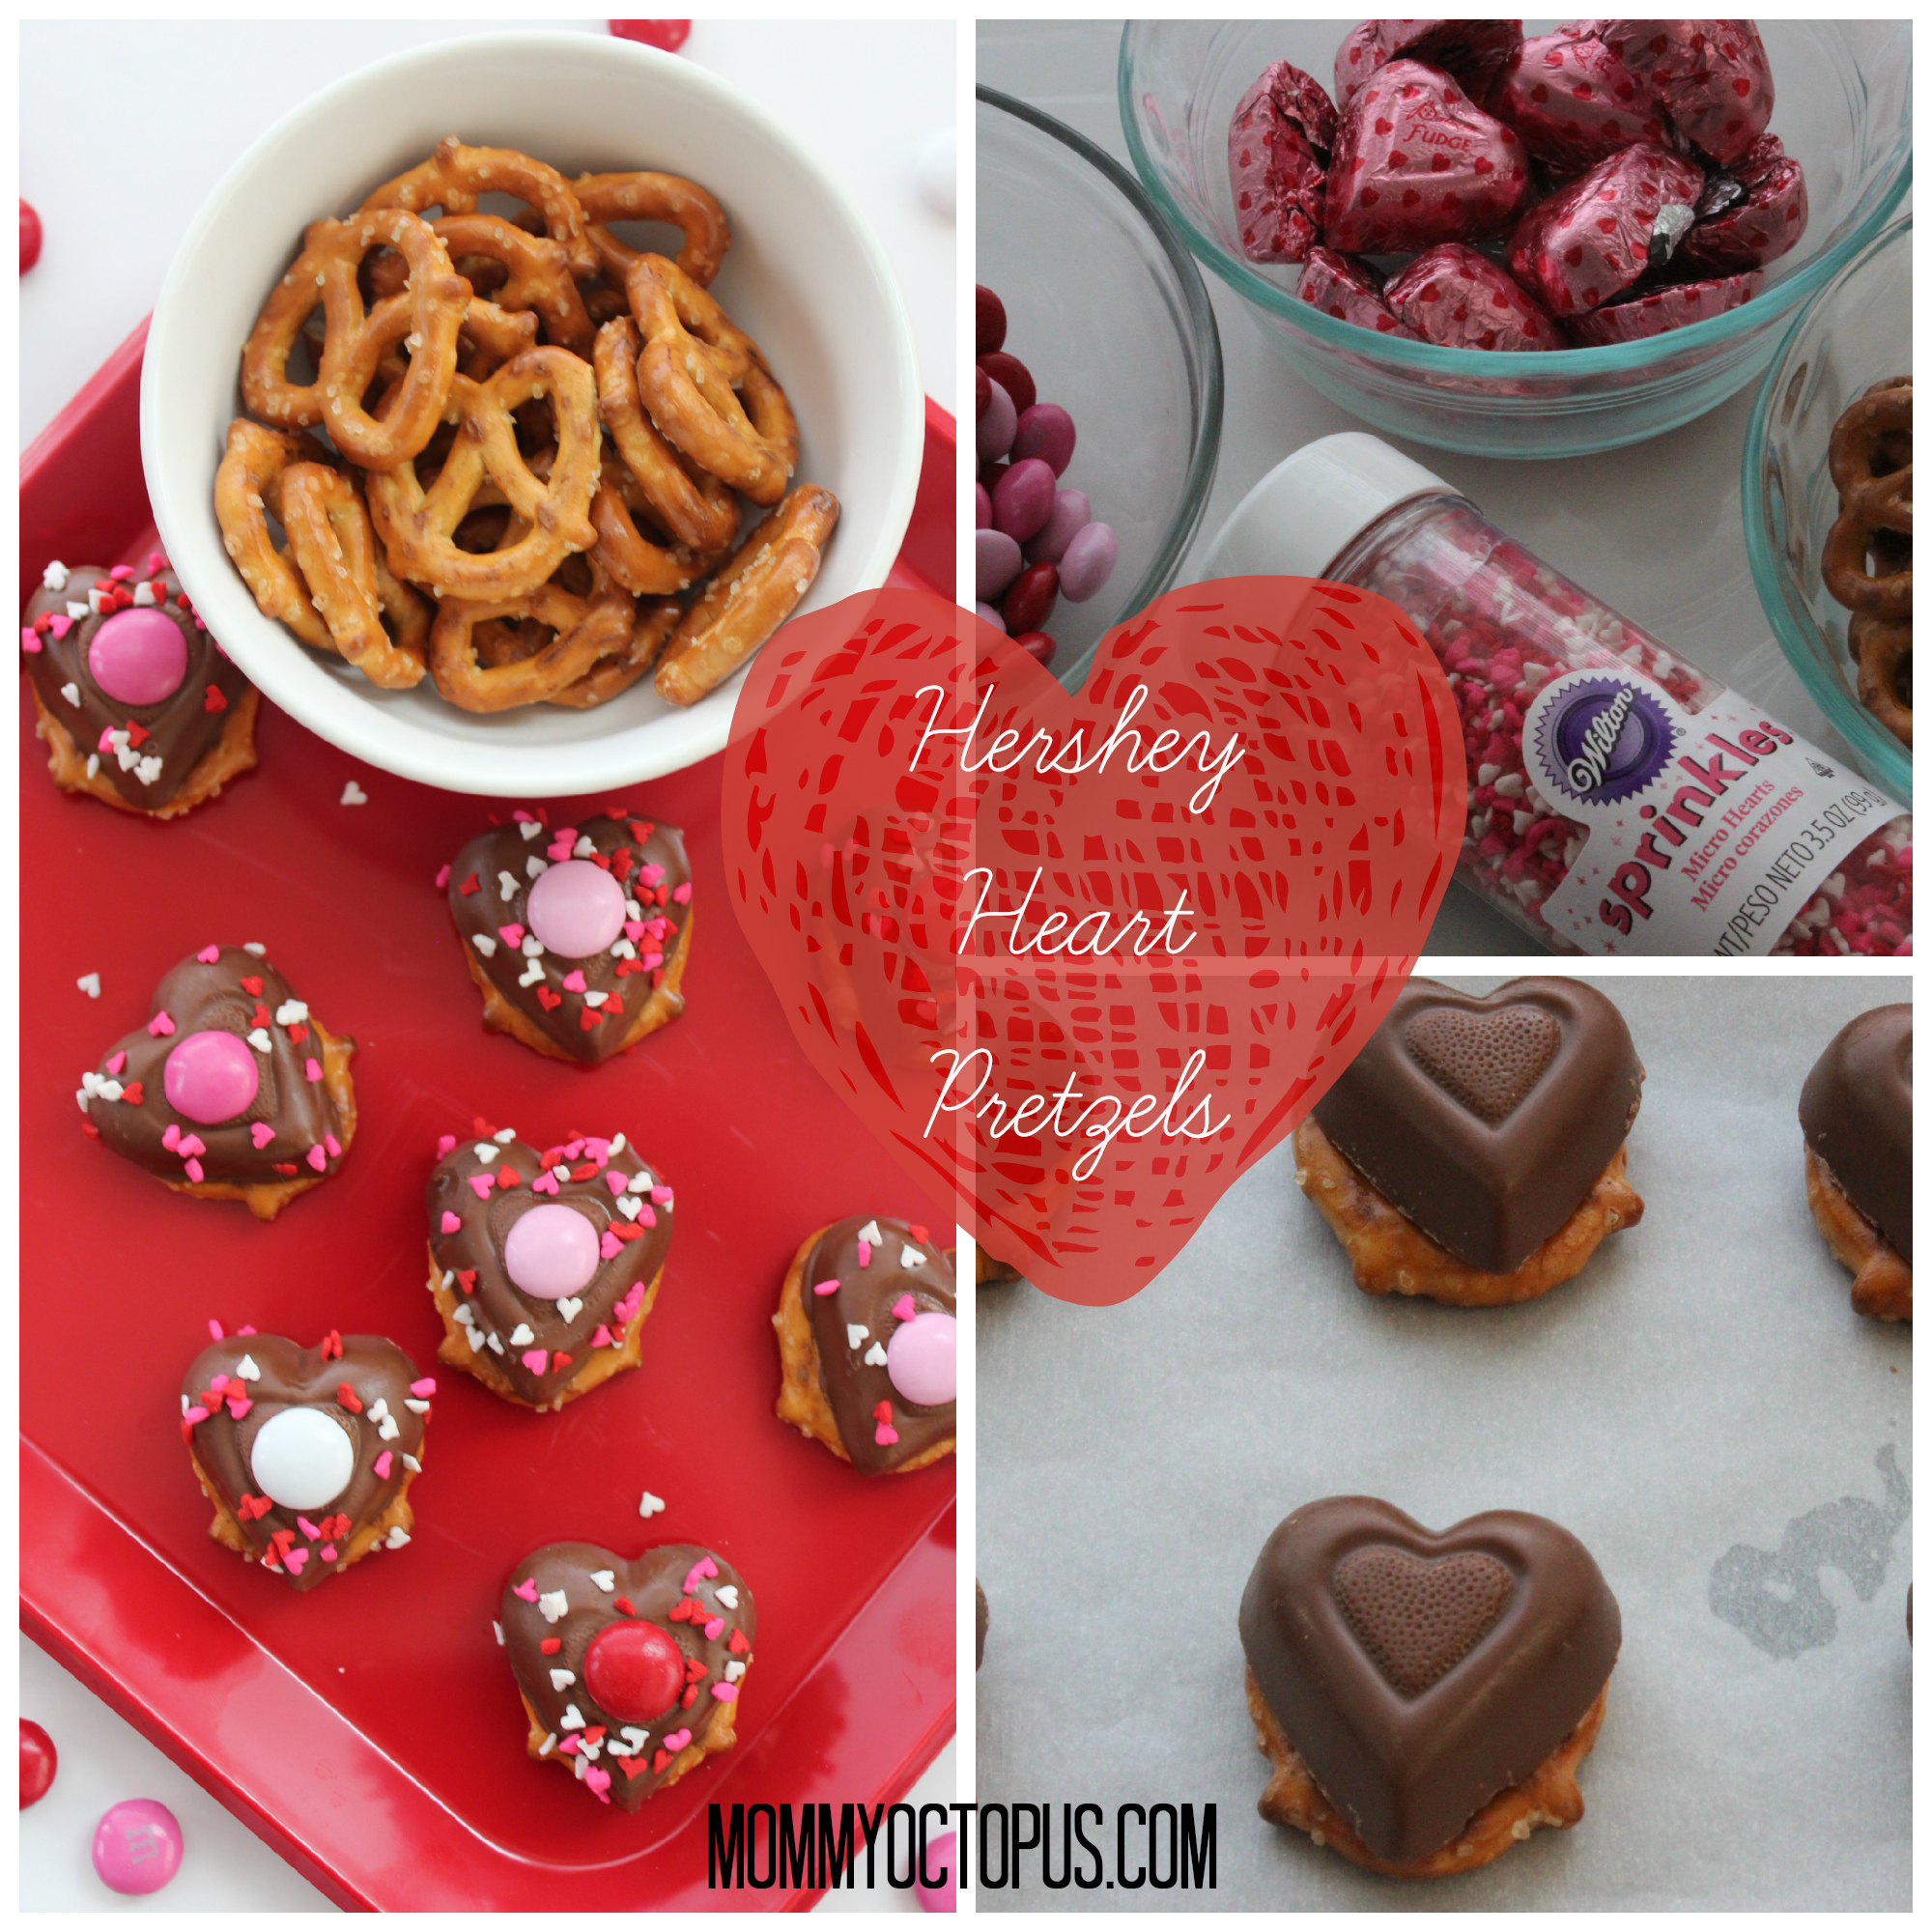 Hershey Heart Prezels for Valentine's Day